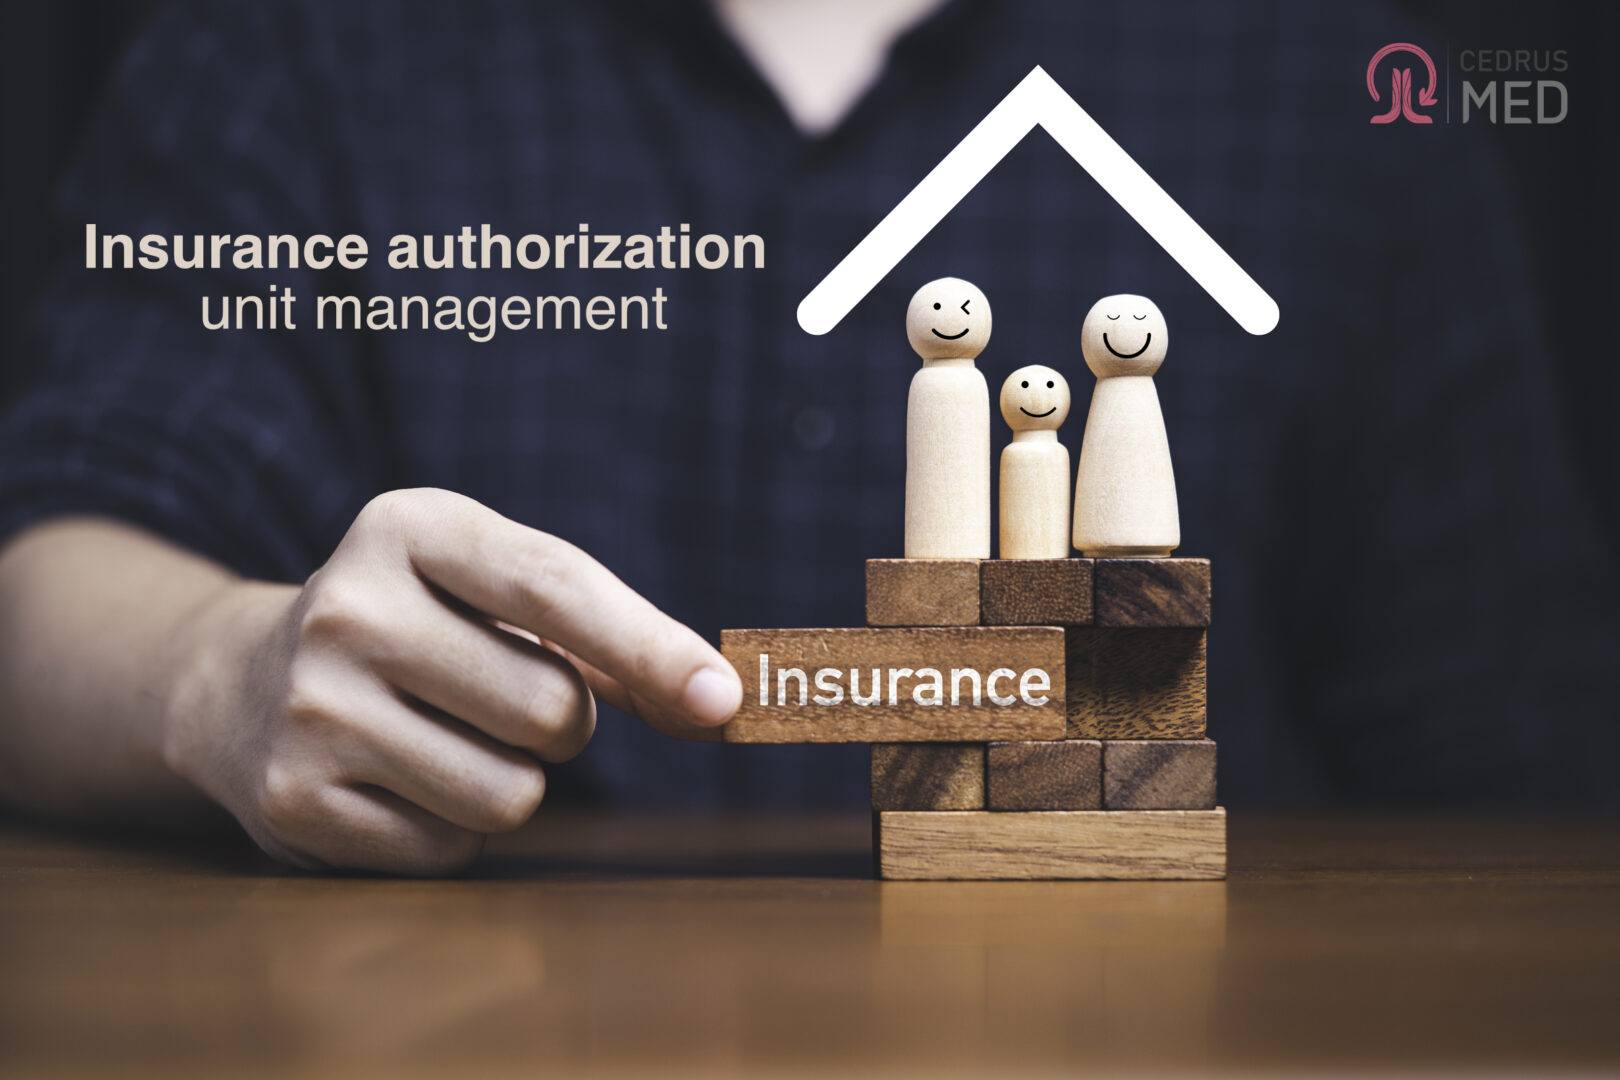 Insurance authorization unit management.